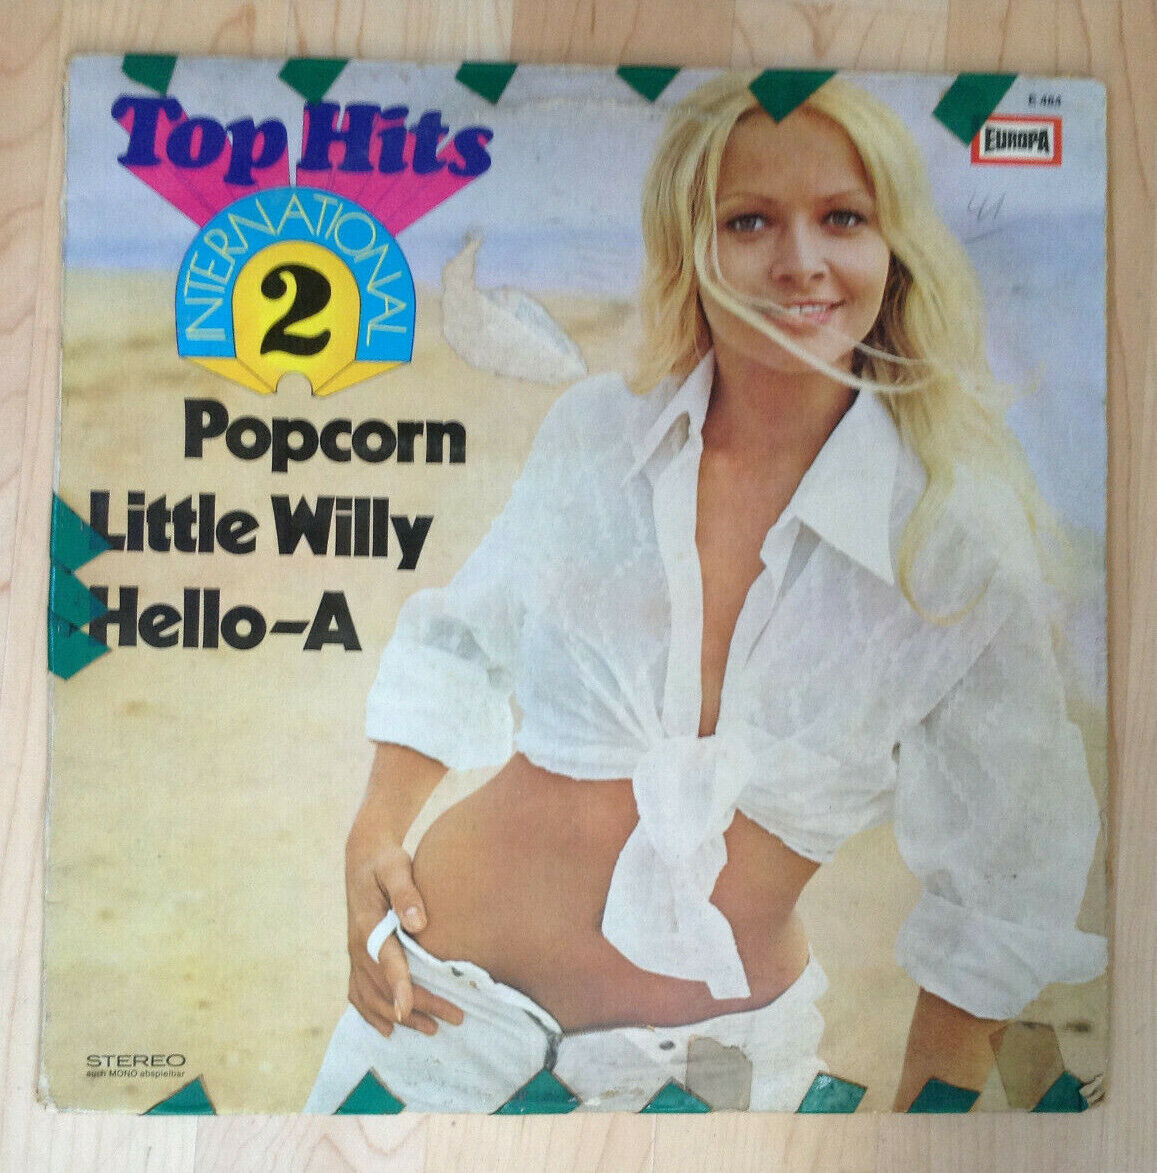 33 RPM Top Hits International 2 Vinyl LP 12 " Hello-A - Popcorn - Fine Girl